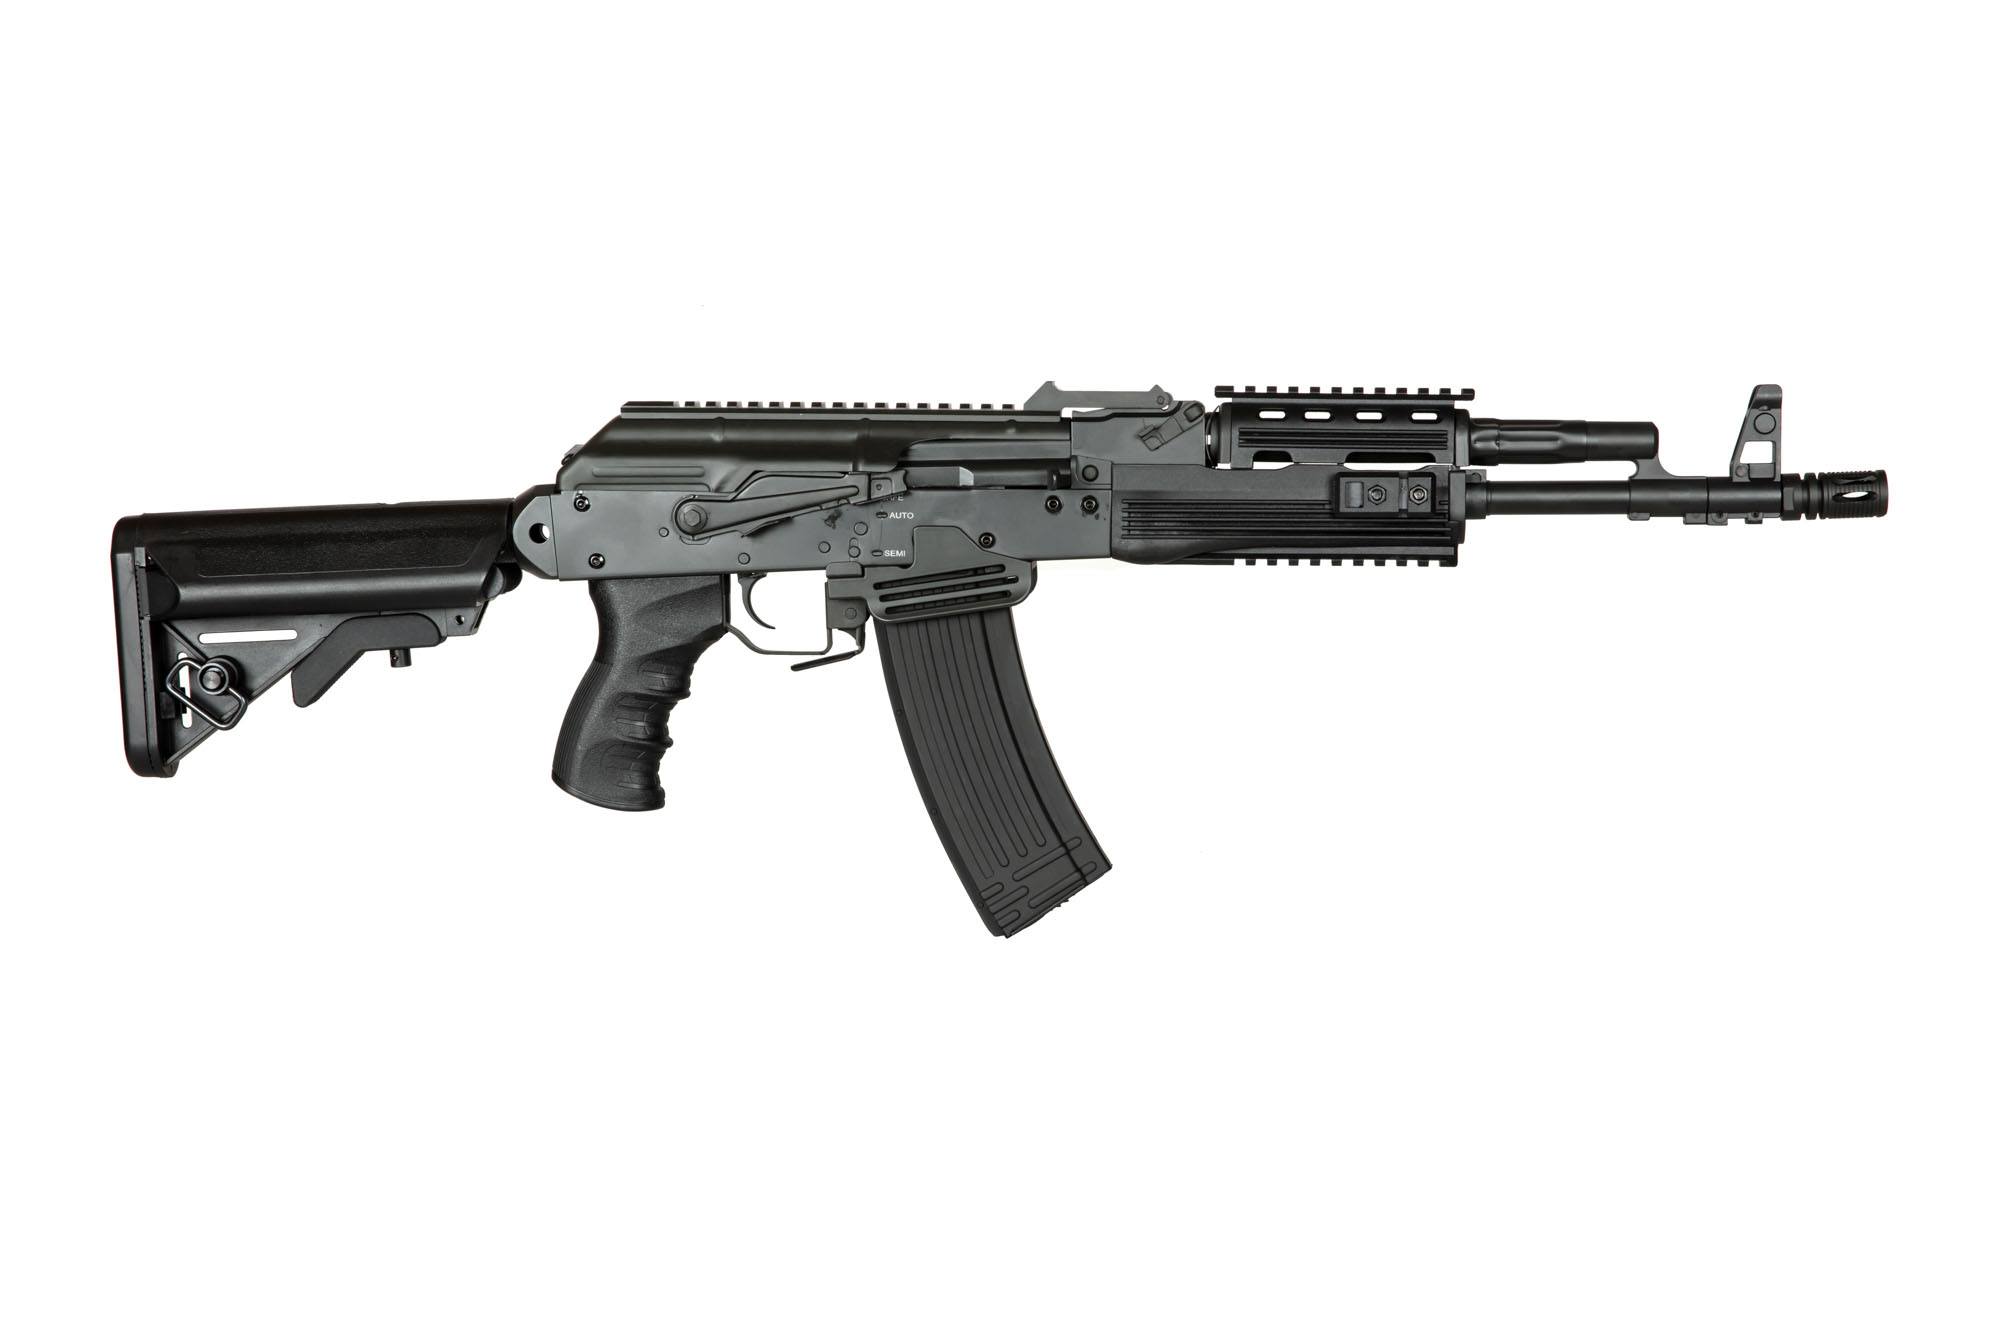 ASK209 Tactical EBB assault rifle